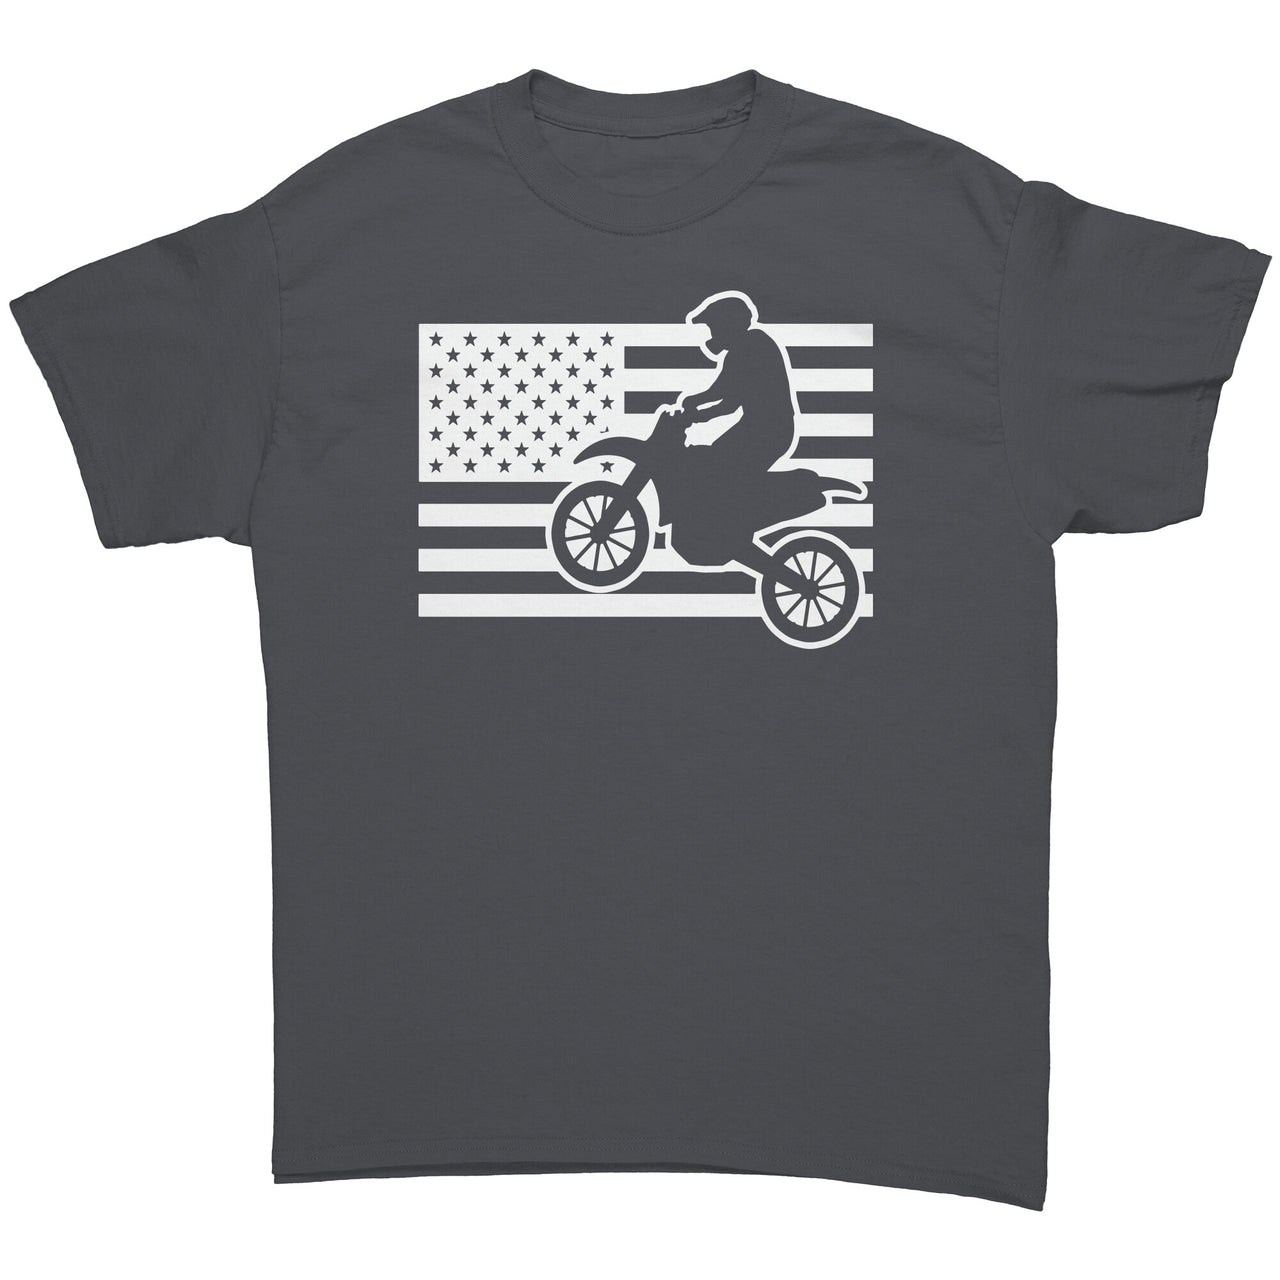 Motocross USA T-Shirts